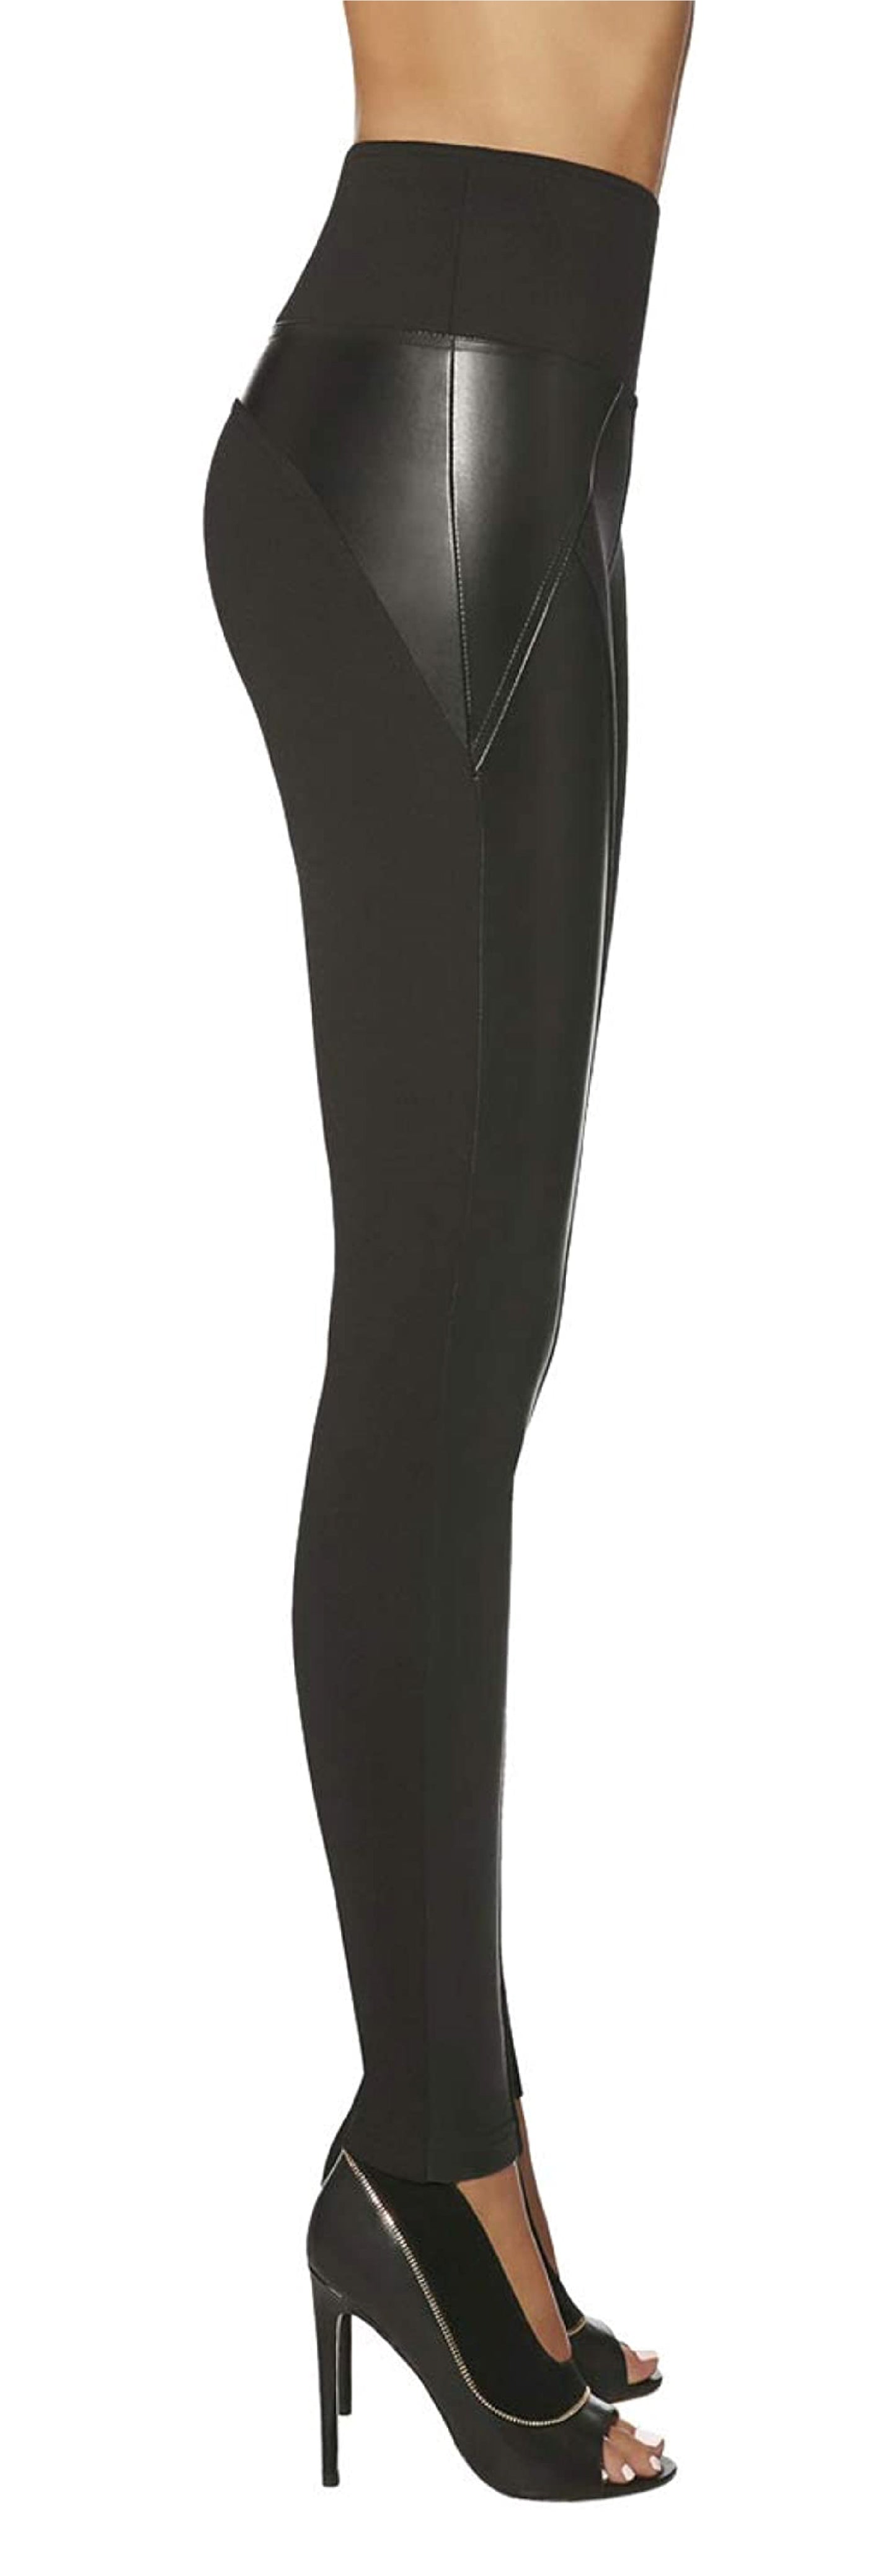 BasBleu Ally Leggings - high waisted control top faux leather panelled leggings